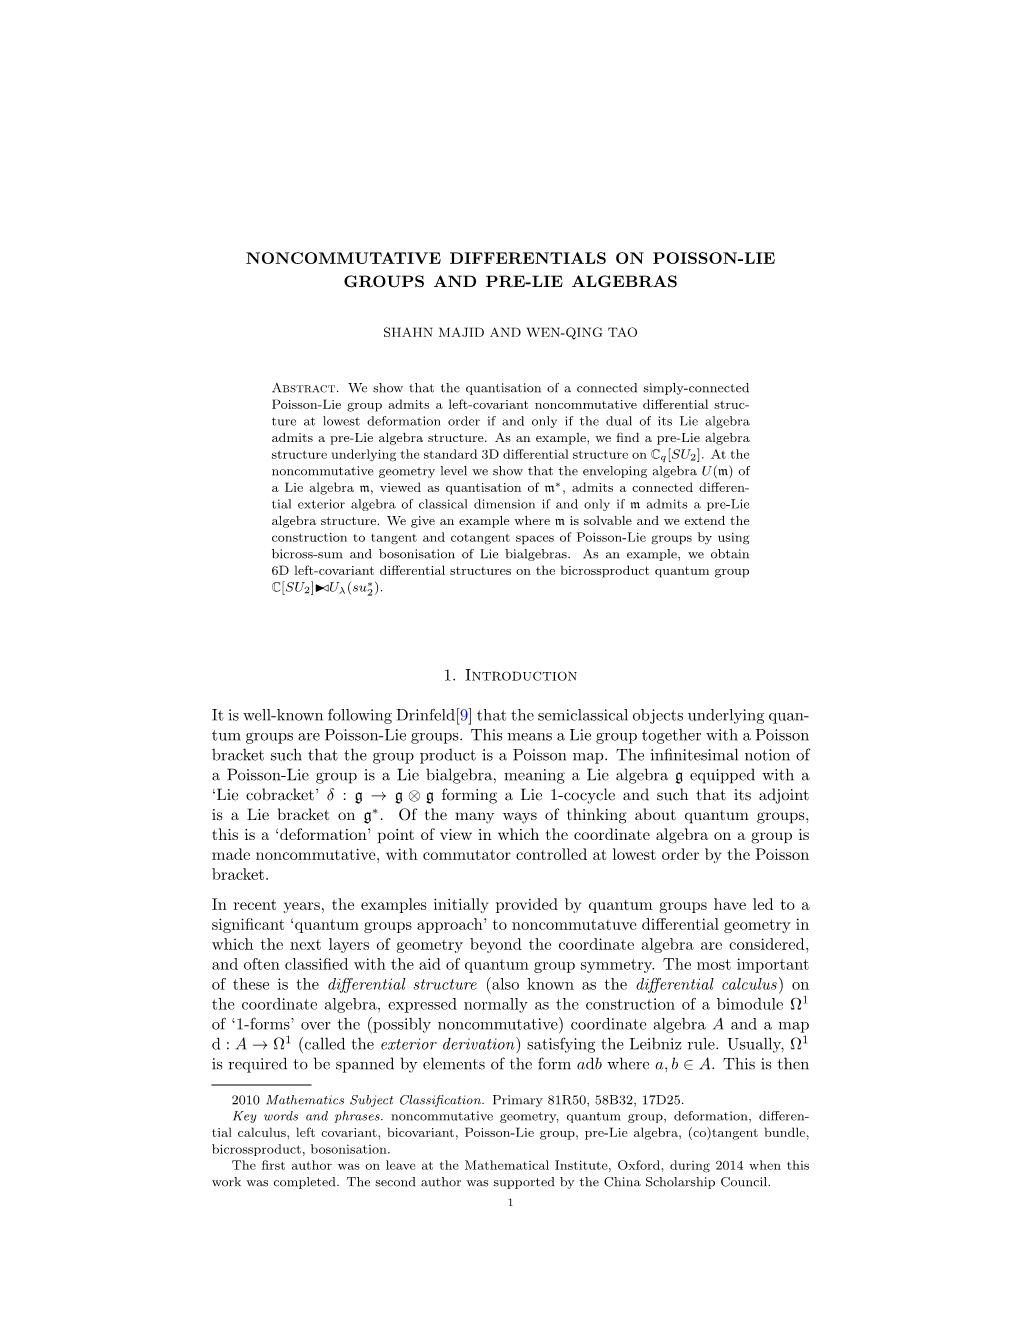 Noncommutative Differentials on Poisson-Lie Groups and Pre-Lie Algebras